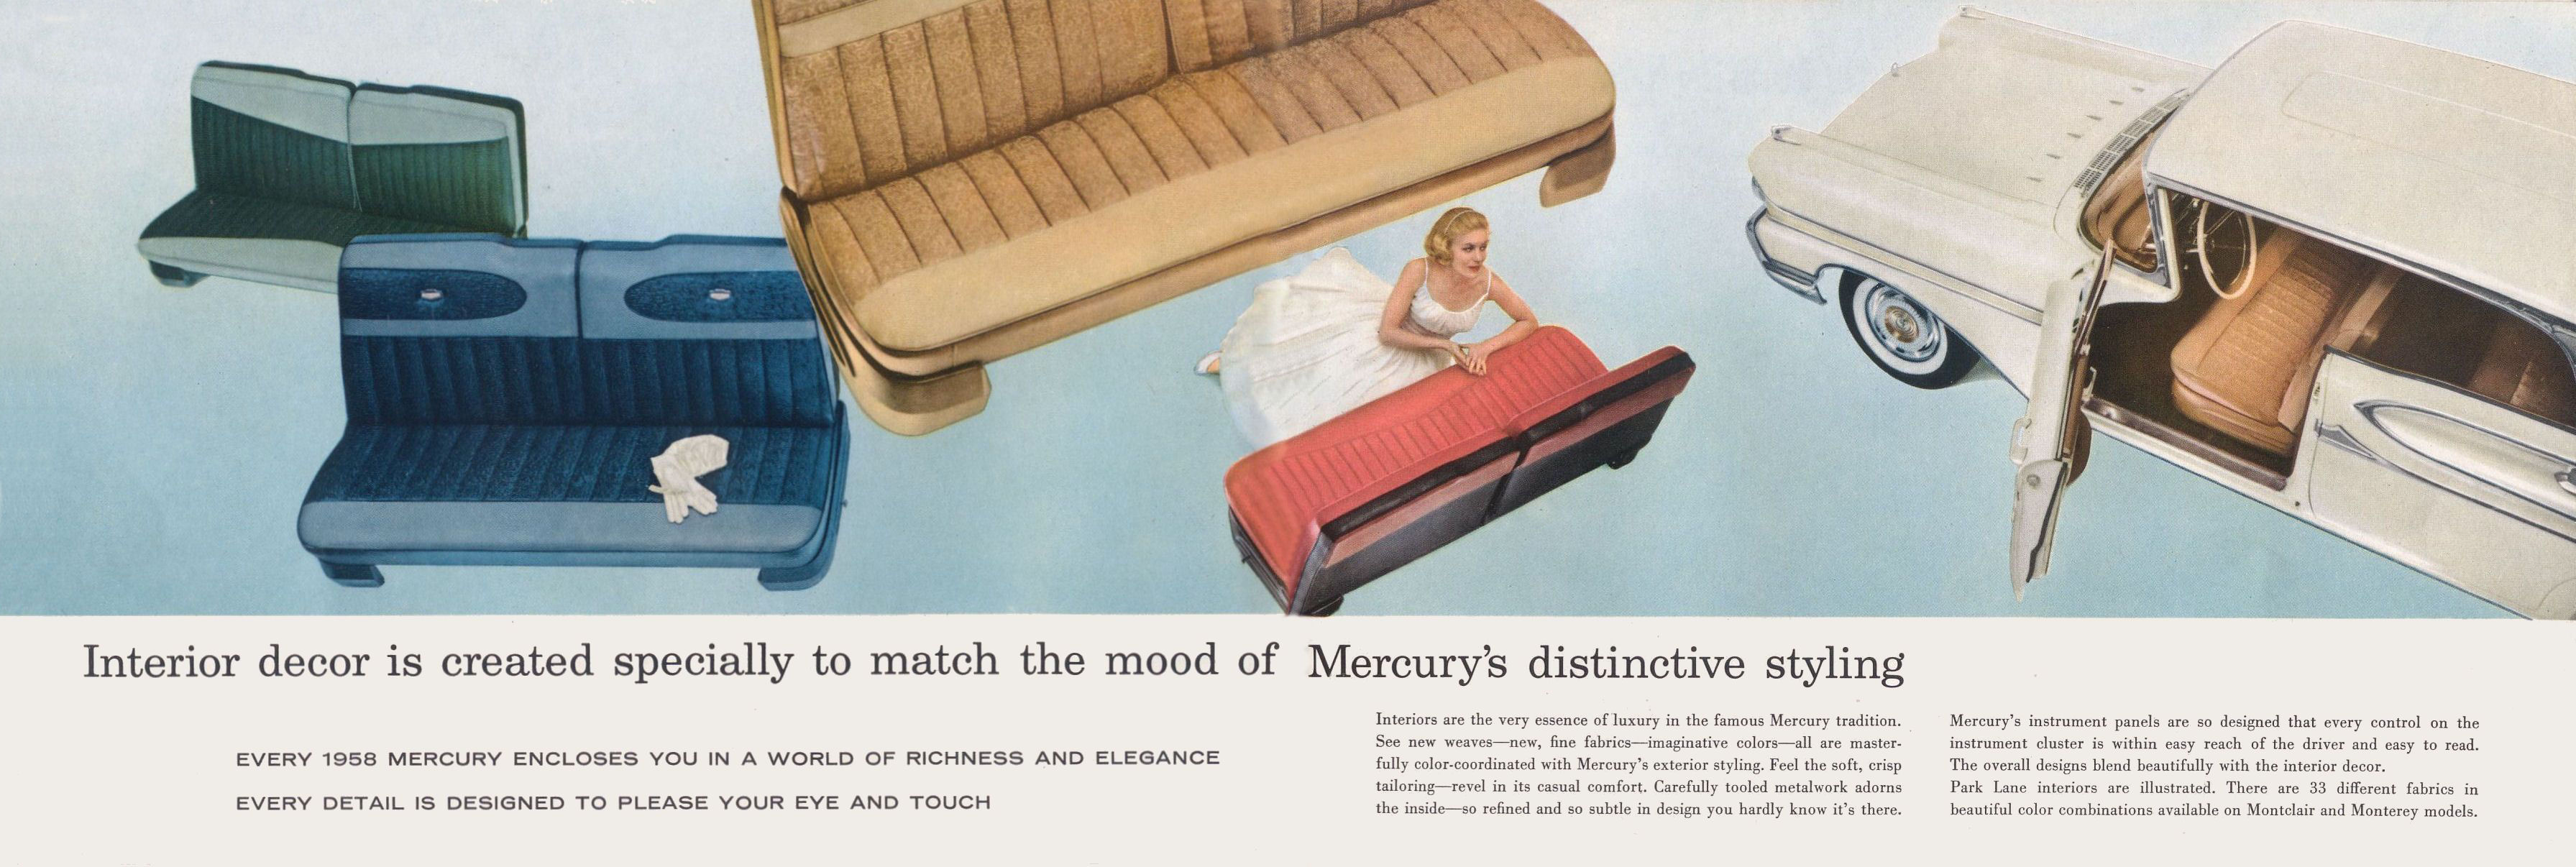 1958 Mercury Brochure-06-07